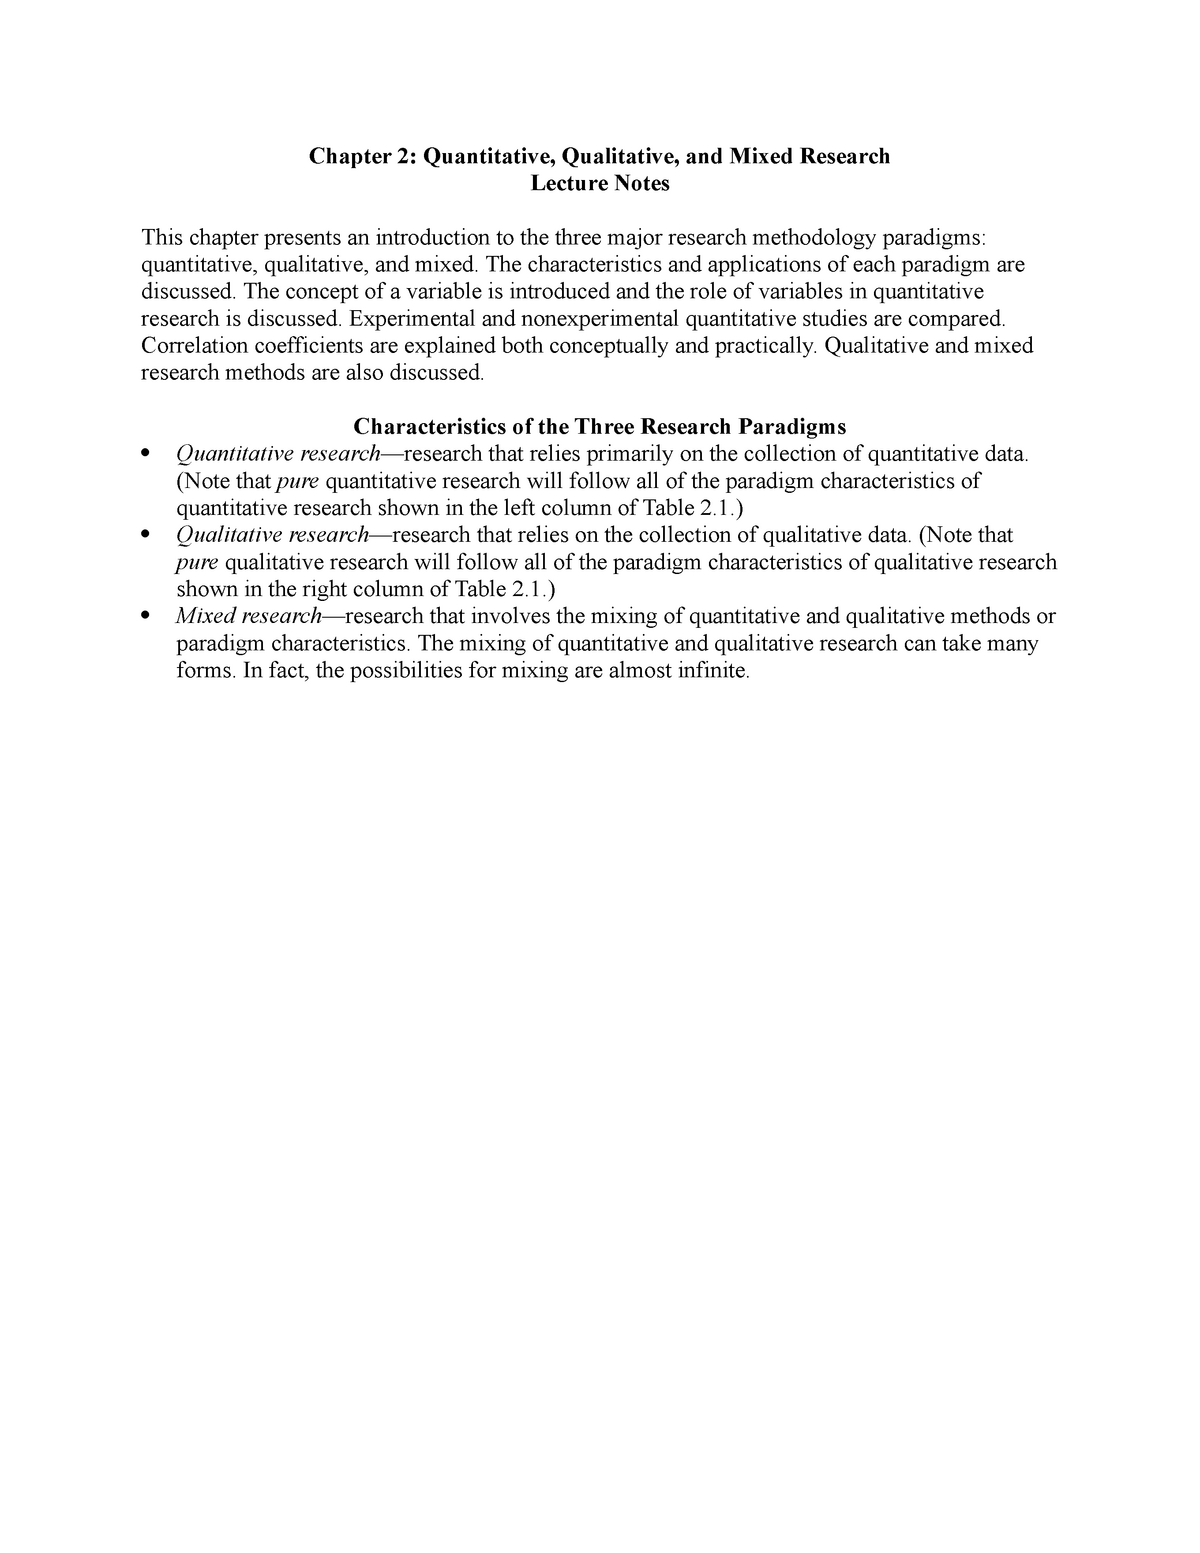 quantitative research chapter 2 example pdf